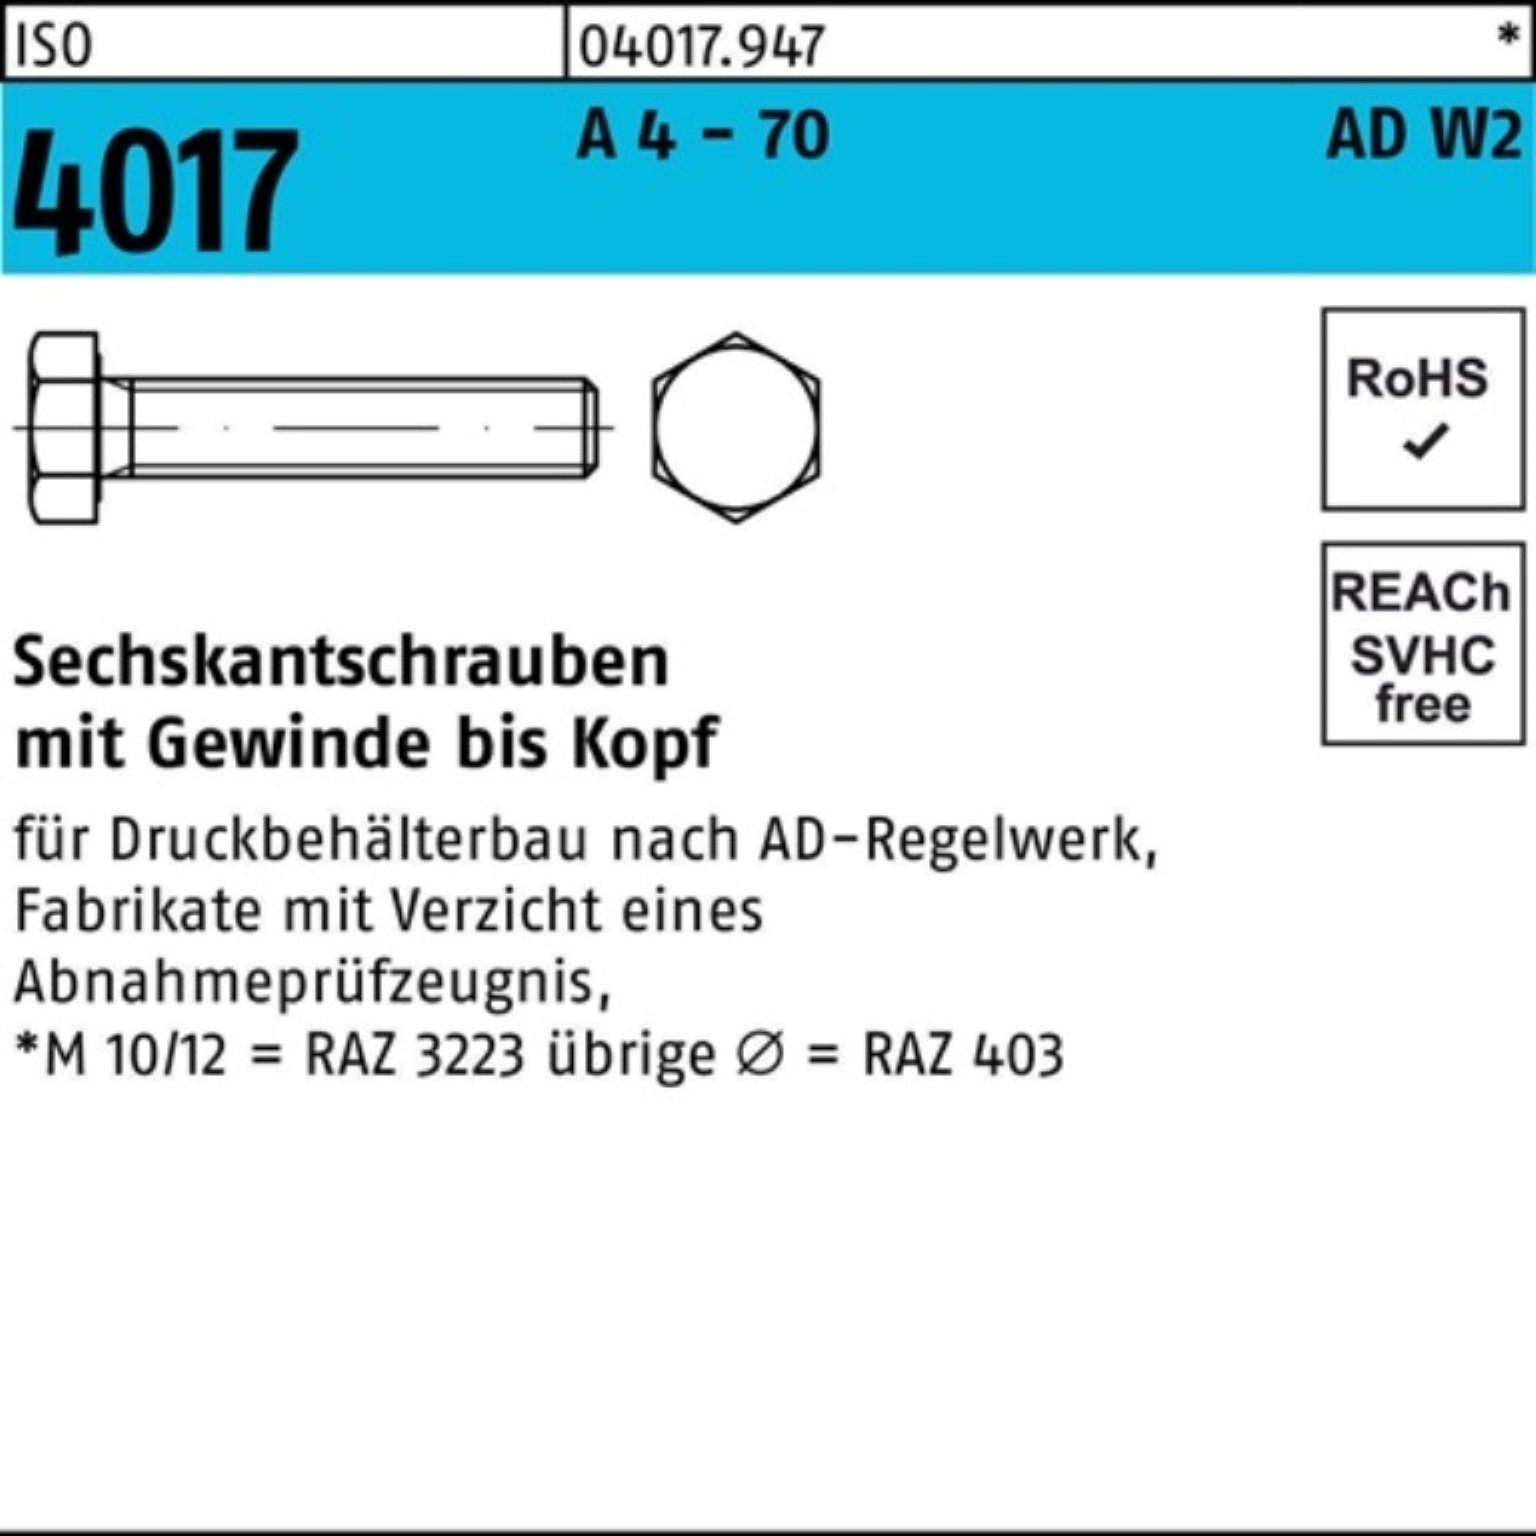 Bufab Sechskantschraube 100er Pack Sechskantschraube - 4 4017 VG M5x 70 AD-W2 ISO St A 10 100